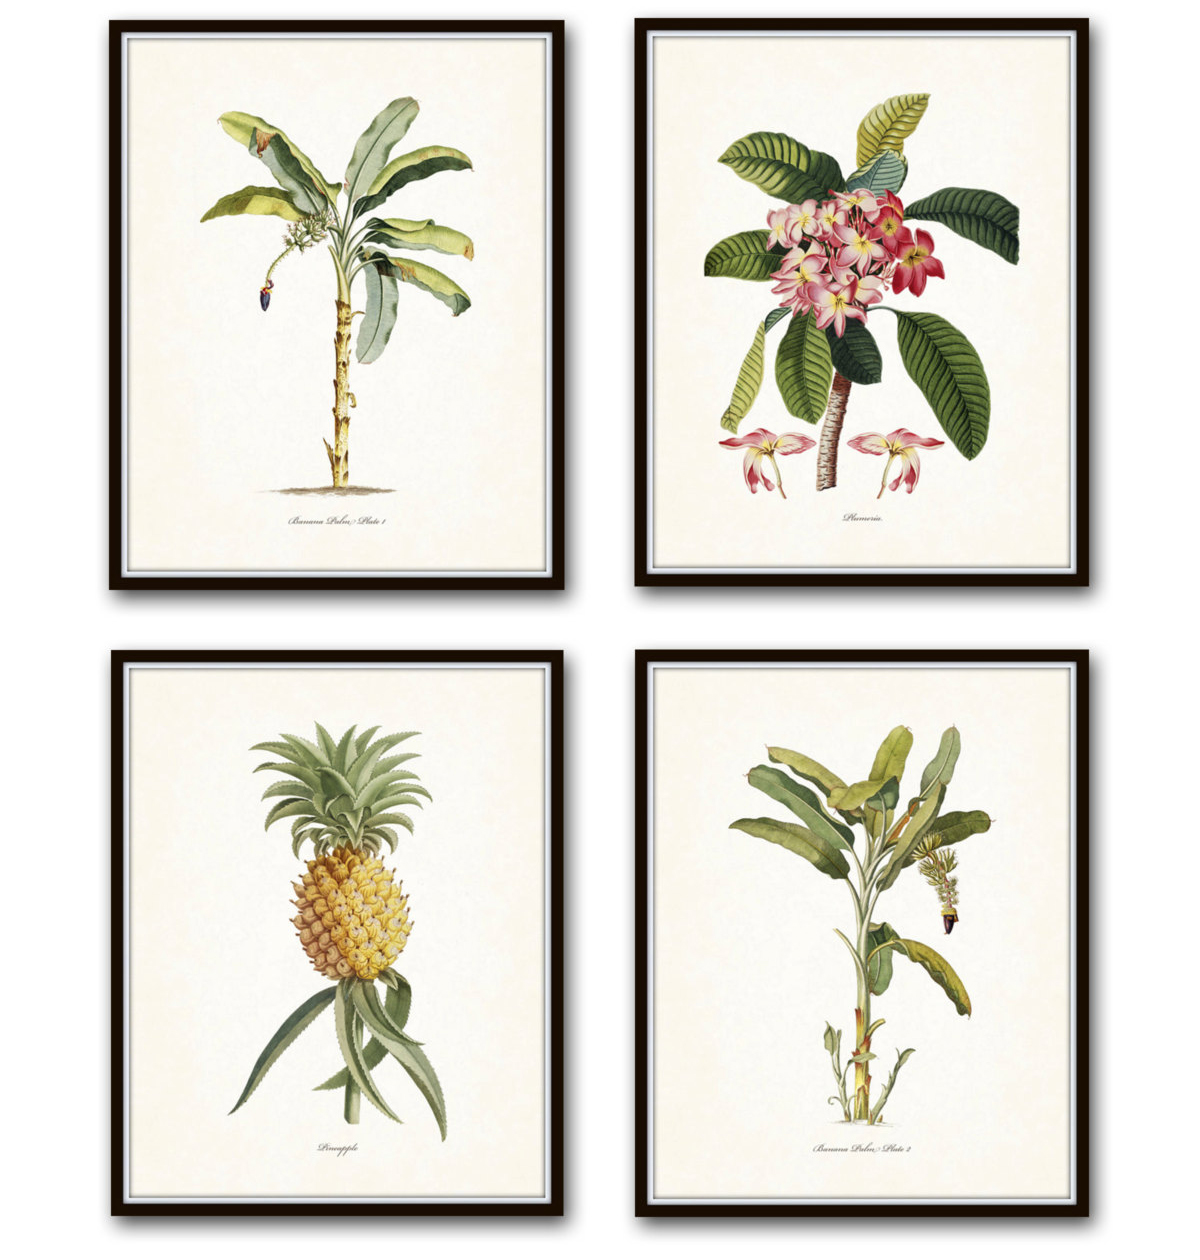 Vintage Botanical Prints from Belle Mer Graphics on Etsy